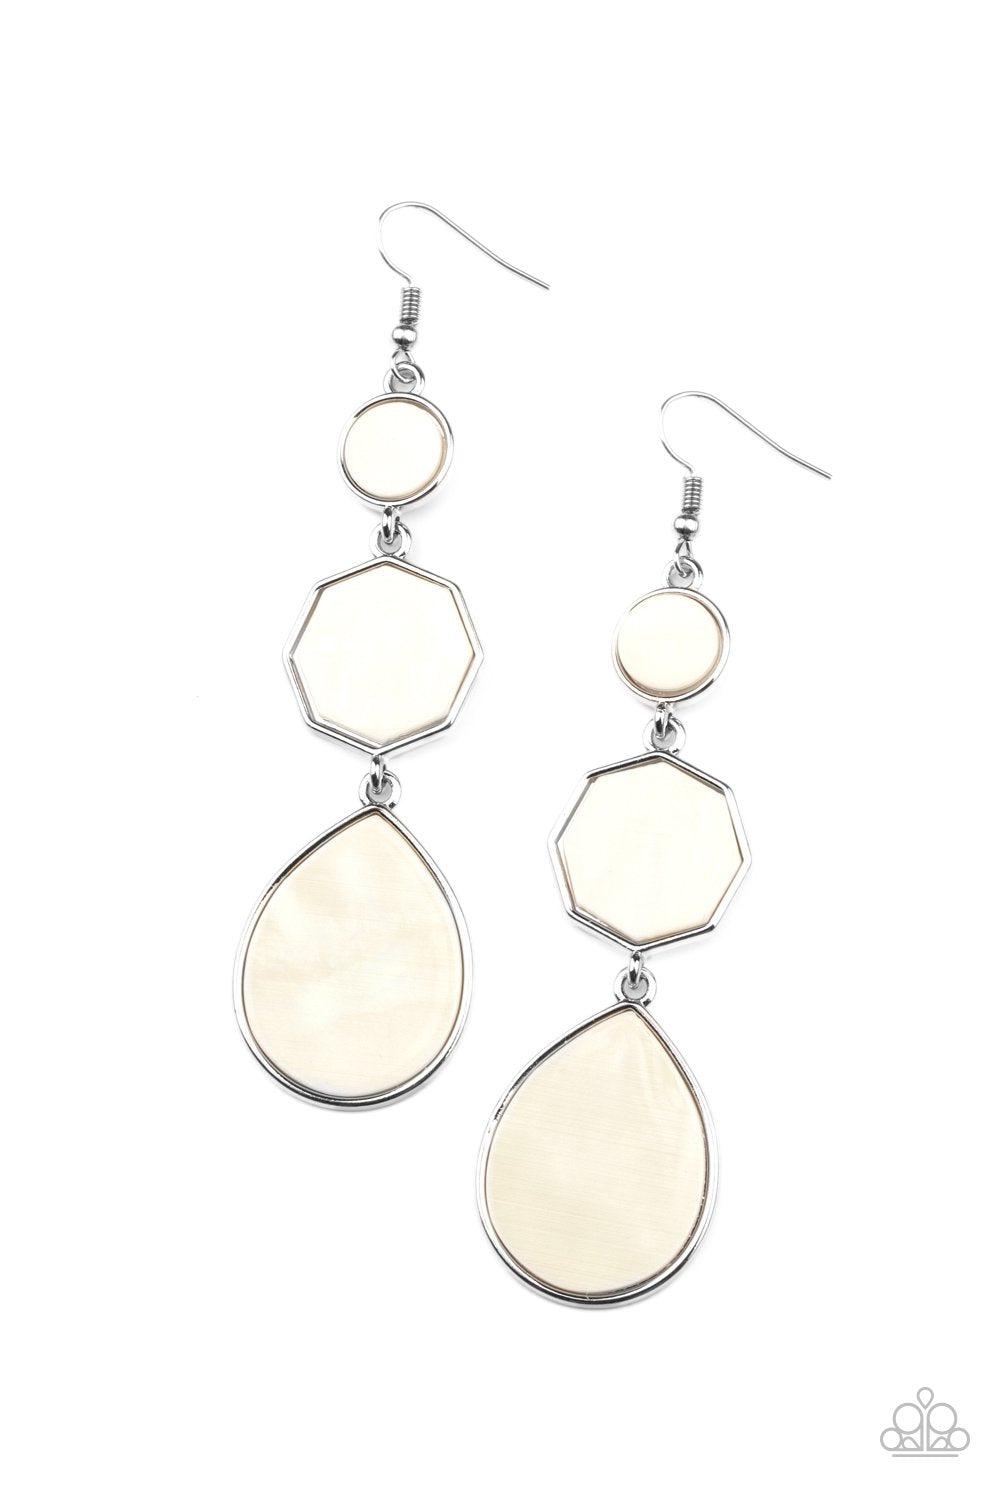 Progressively Posh White Shell-like Earrings - Paparazzi Accessories - lightbox -CarasShop.com - $5 Jewelry by Cara Jewels